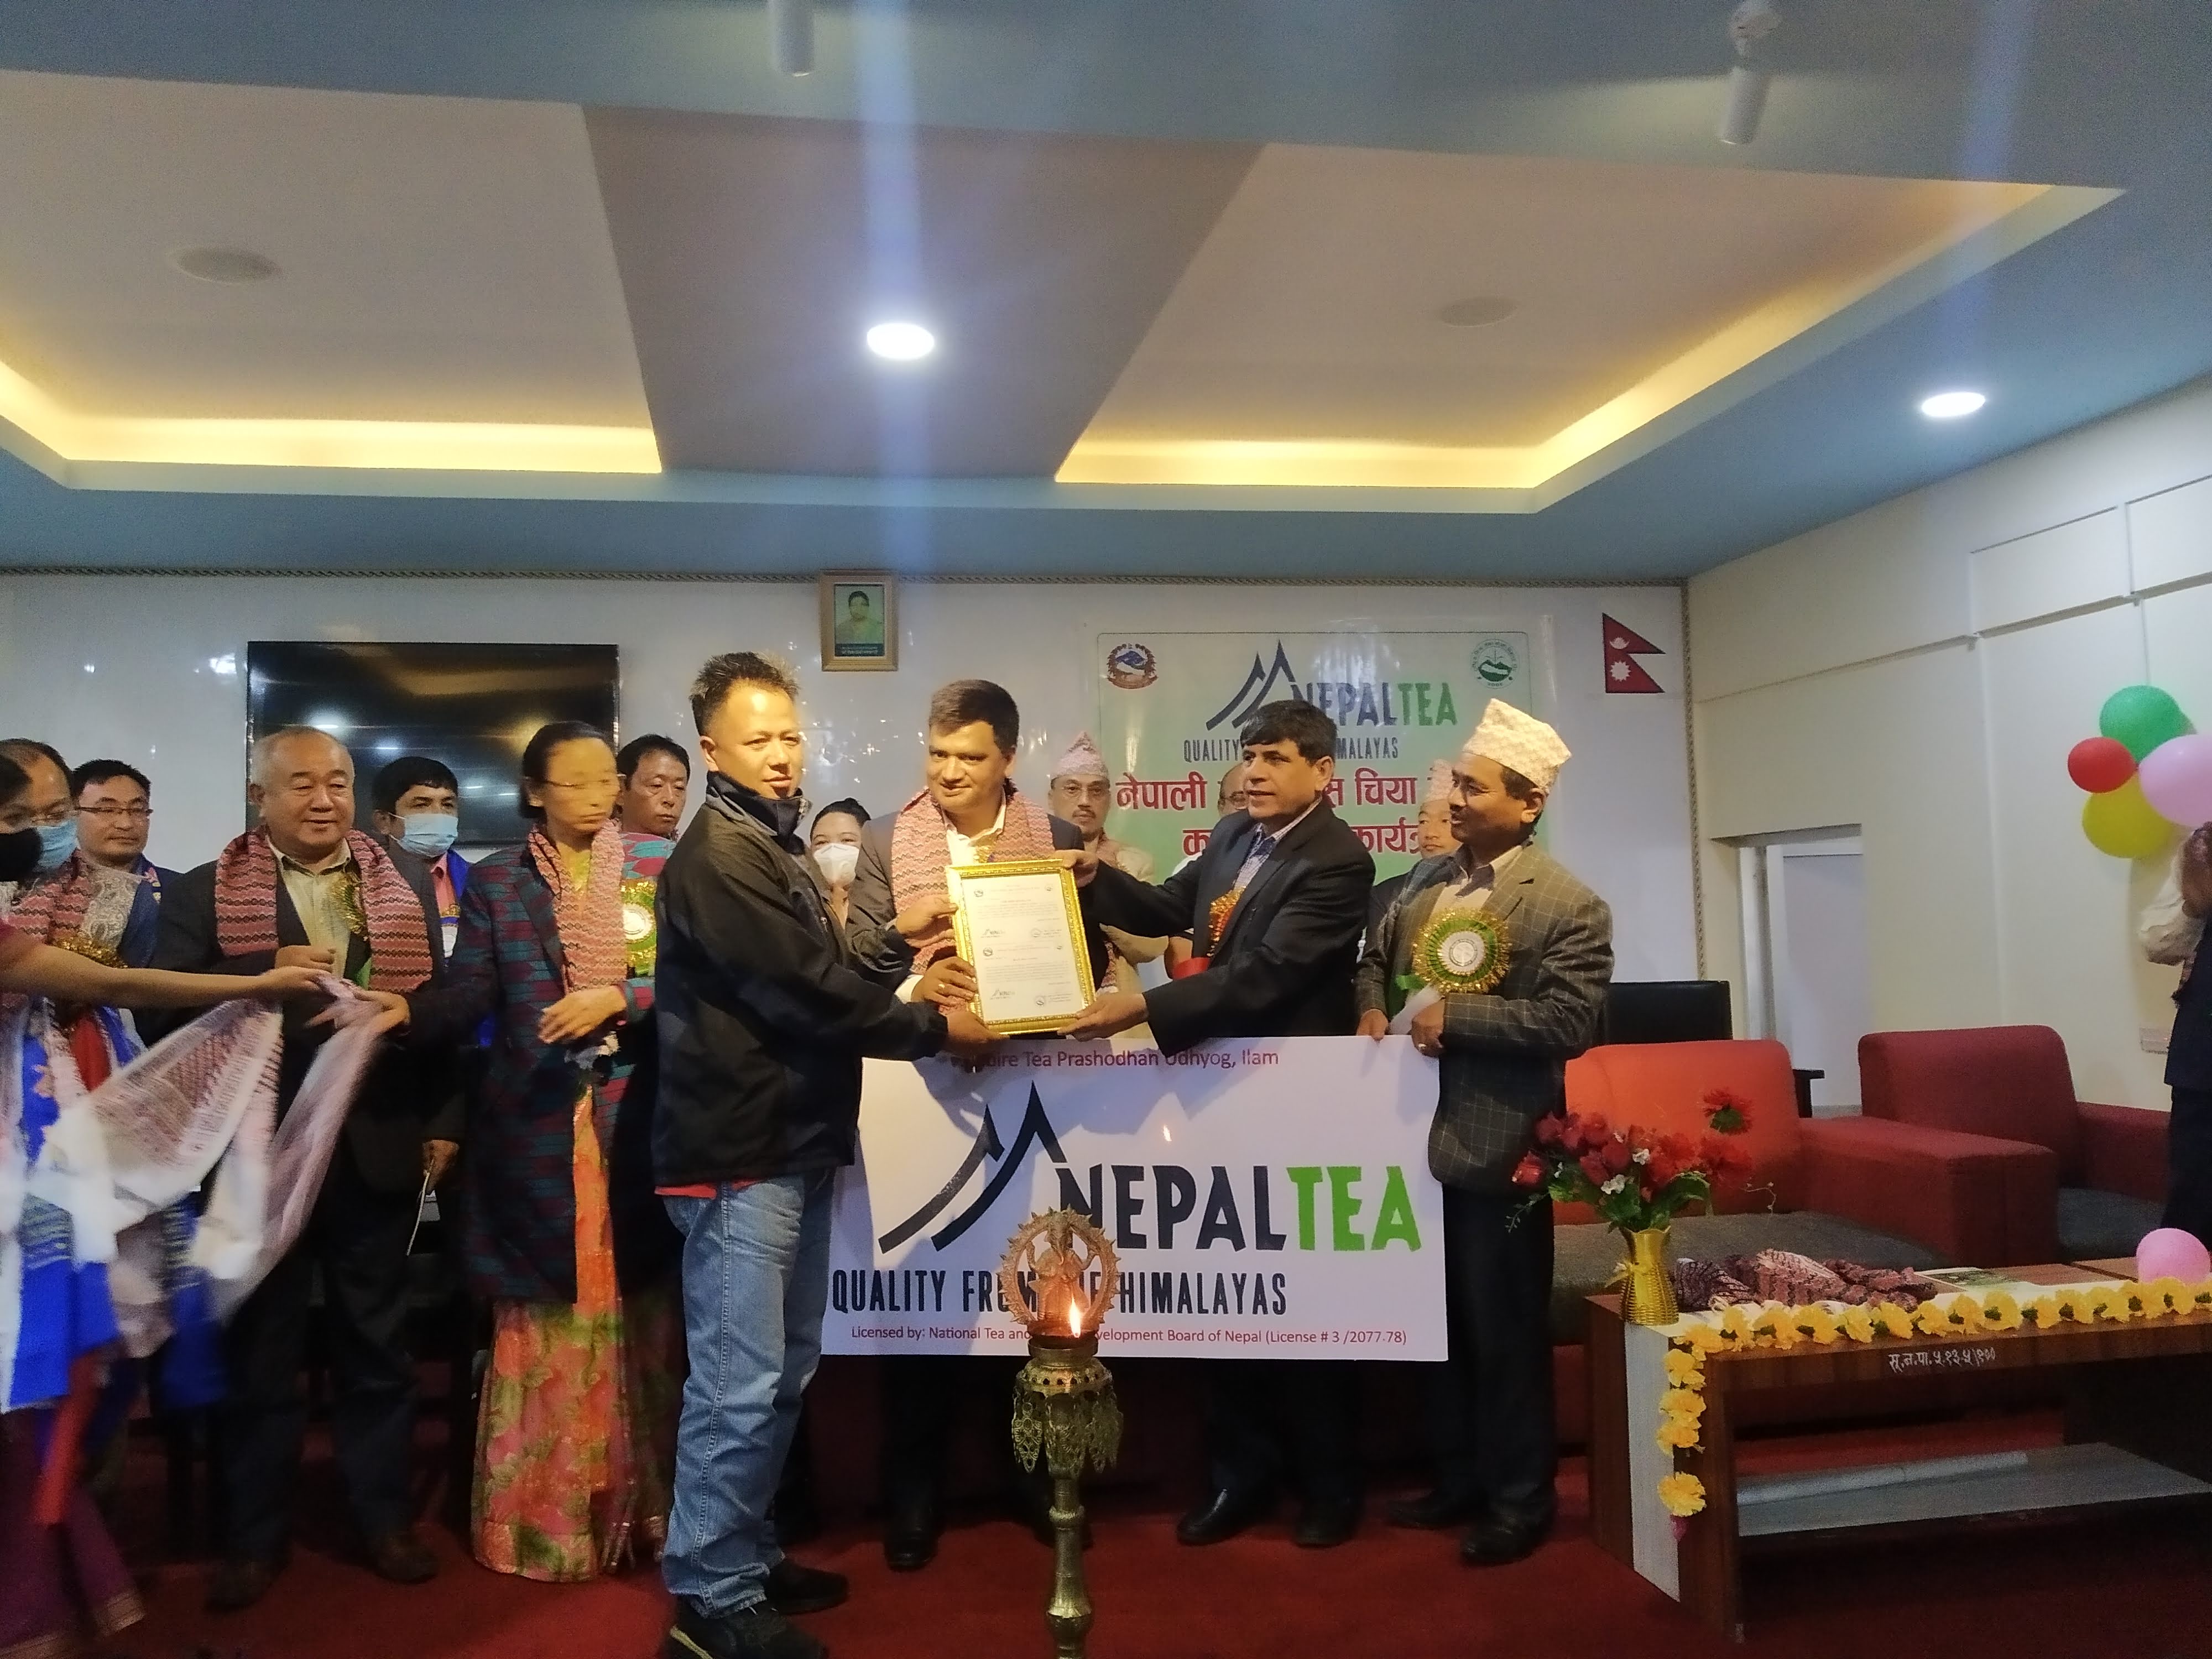 Nepal Tea Trademark Implementation Program